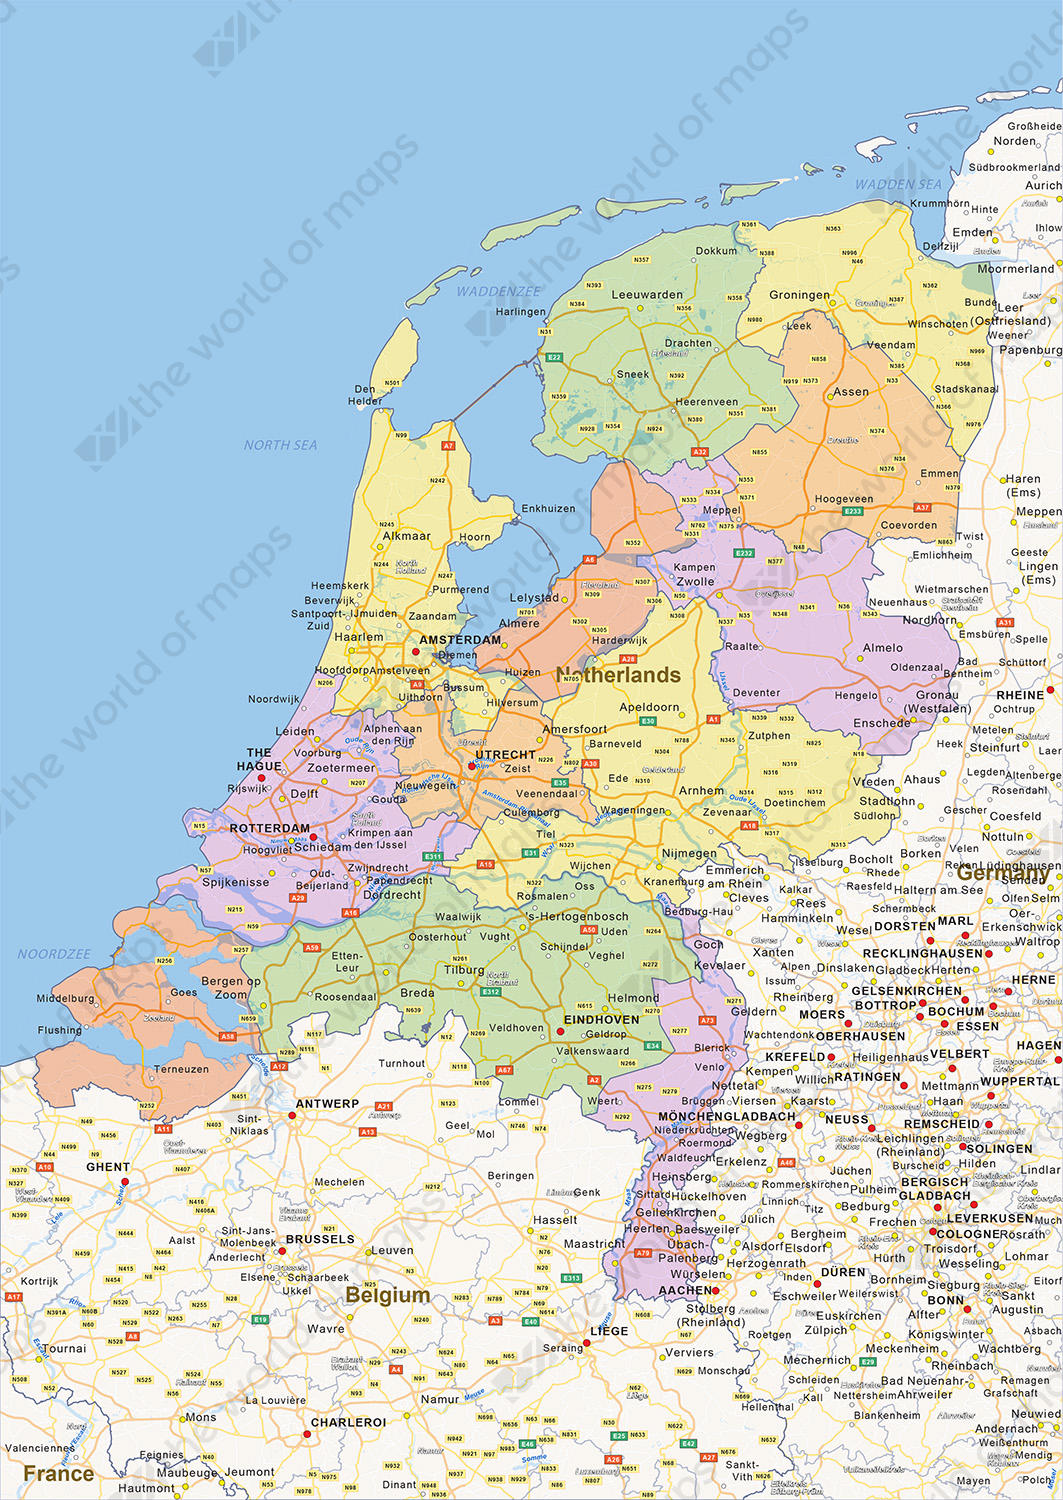 Digital politcal map of The Netherlands